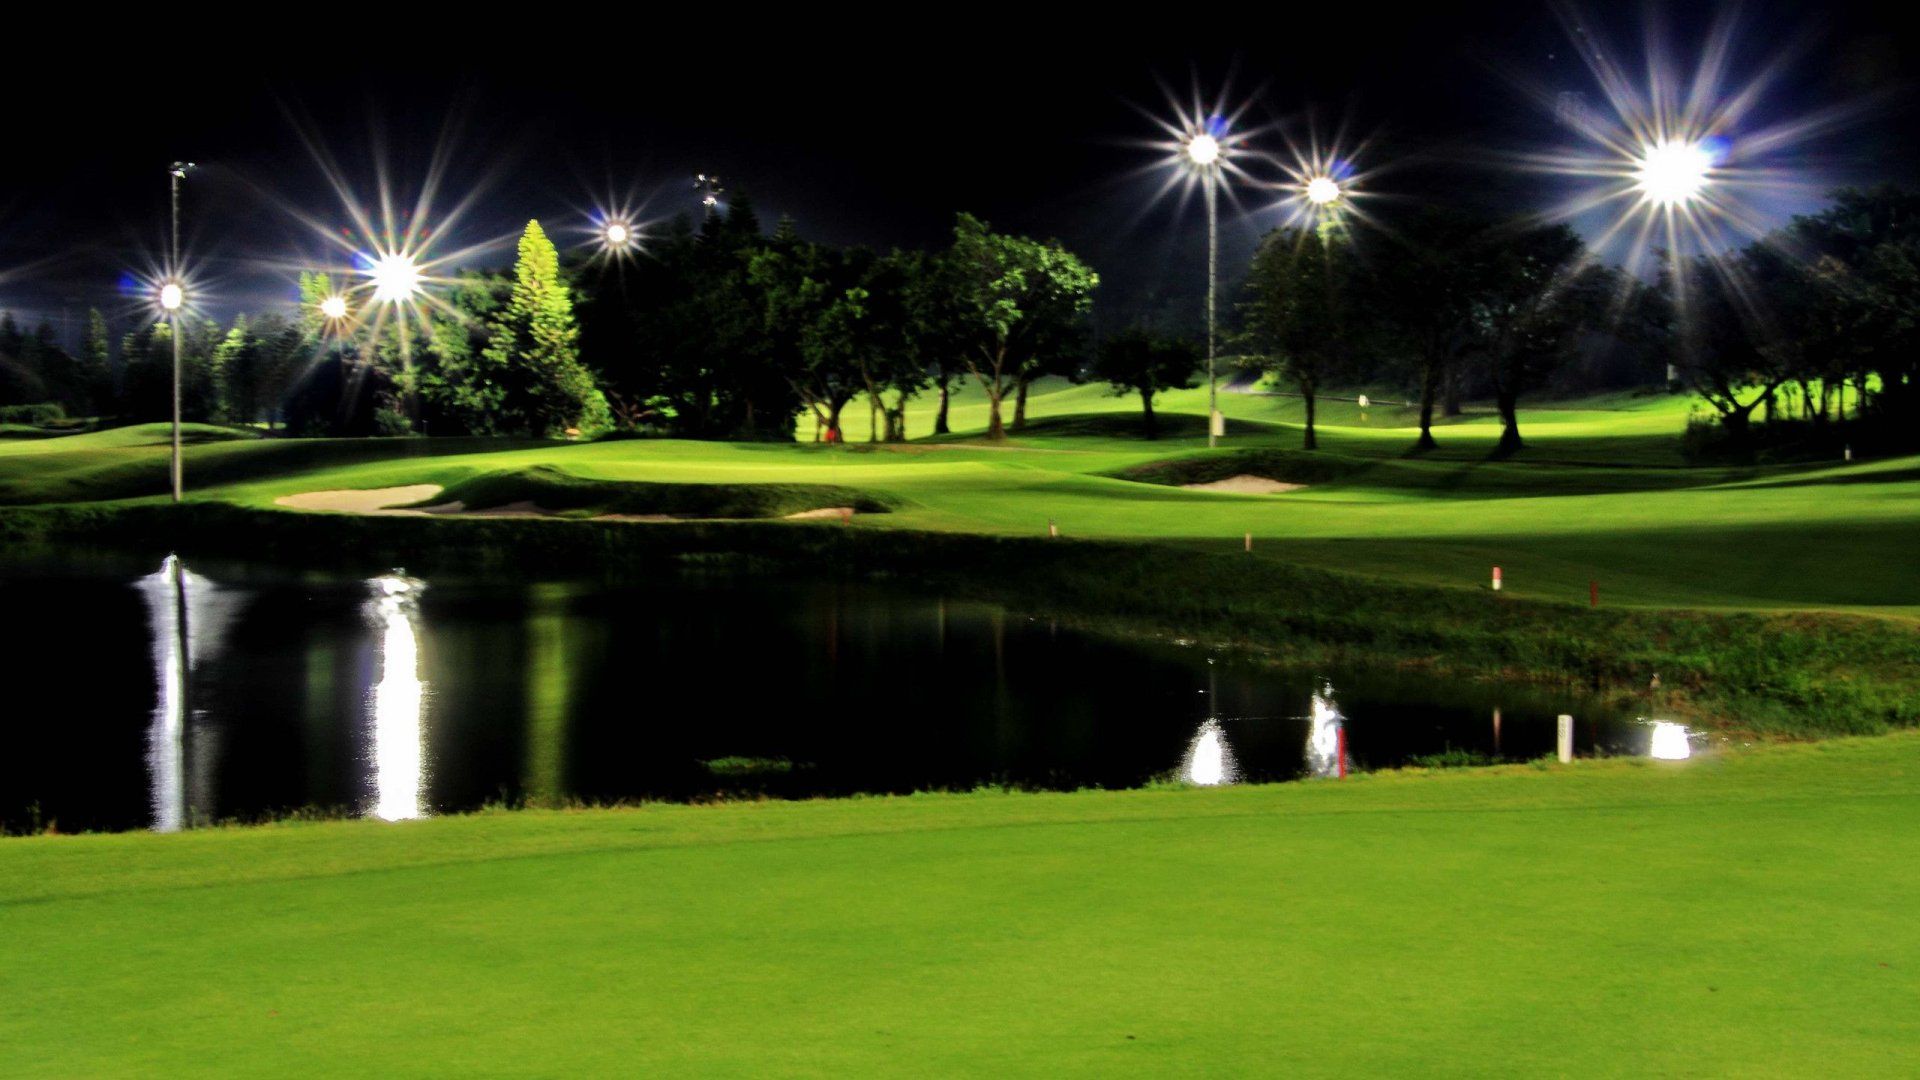 Night Golf Course Wallpaper Download - Optawall.com